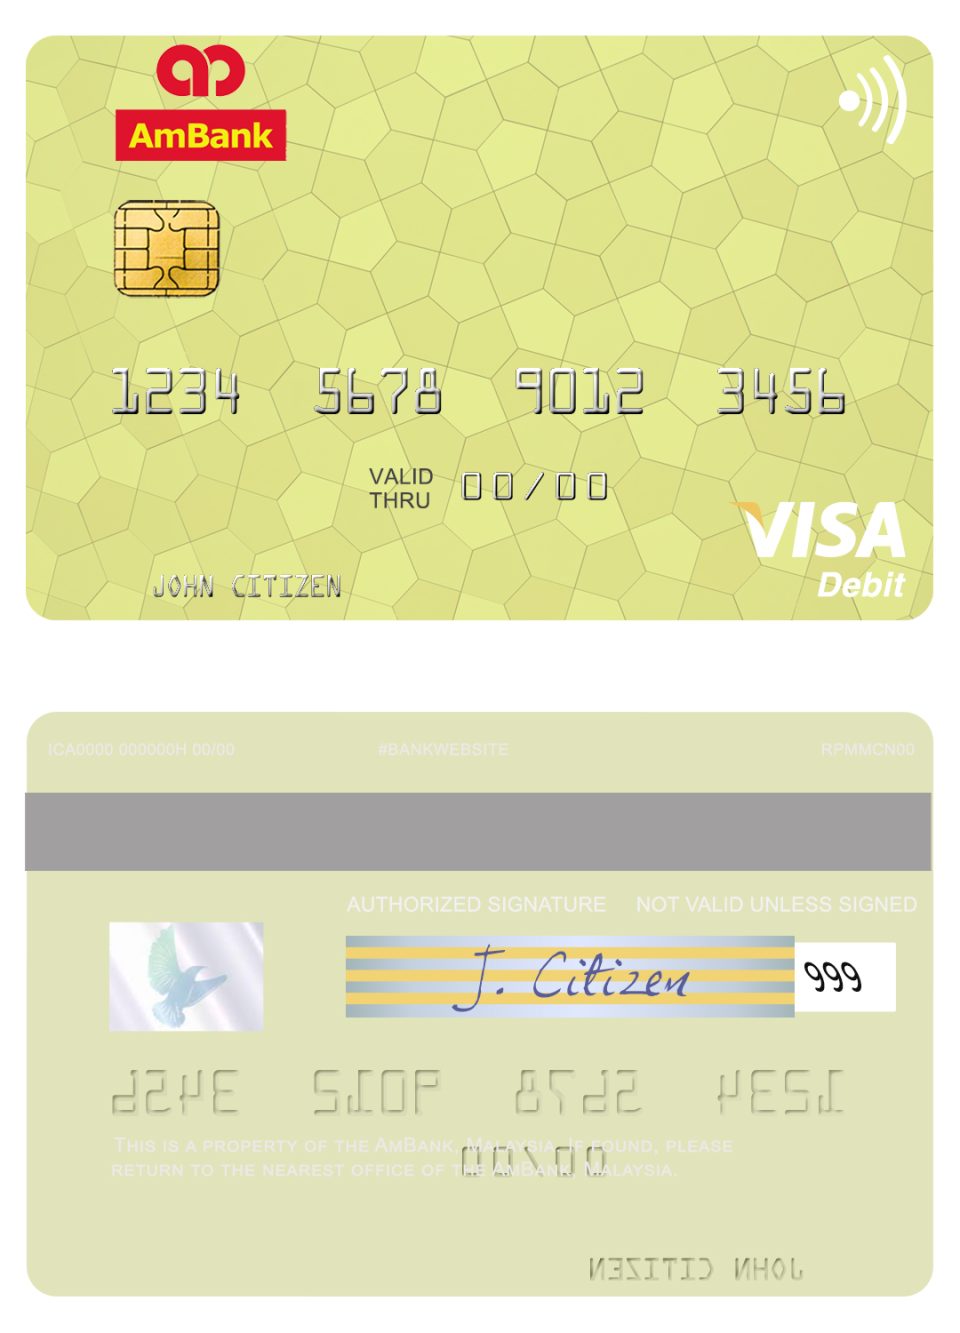 Fillable Malaysia AmBank visa credit card Templates | Layer-Based PSD